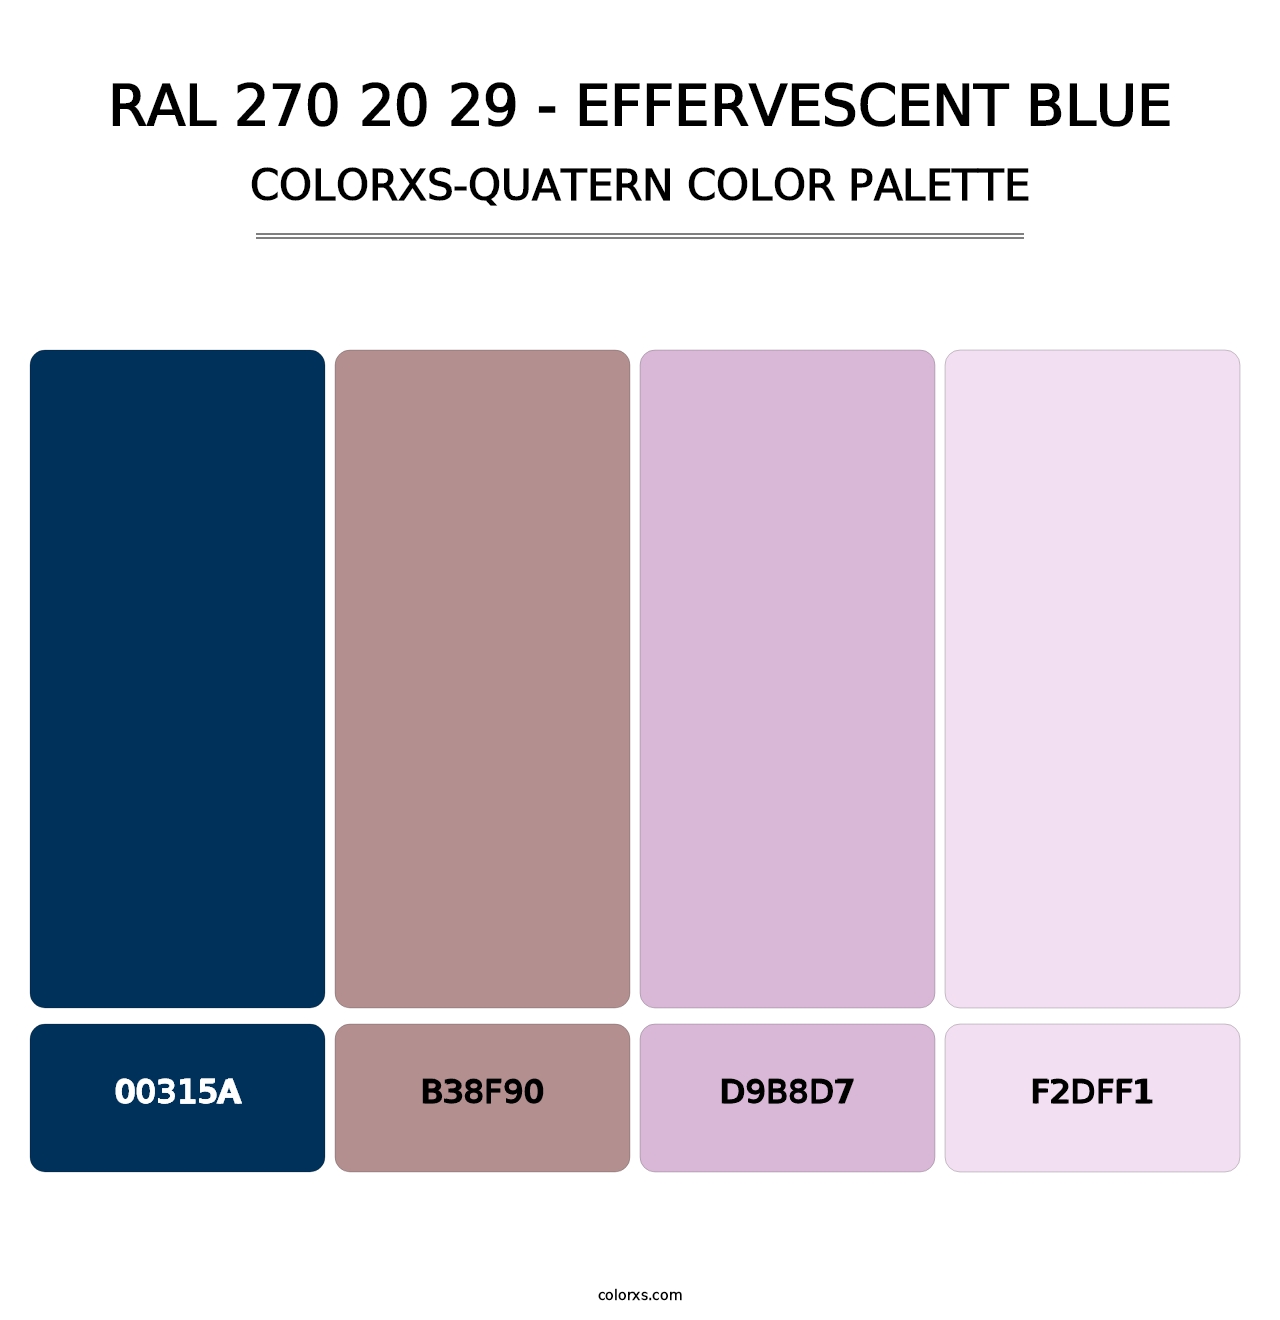 RAL 270 20 29 - Effervescent Blue - Colorxs Quatern Palette